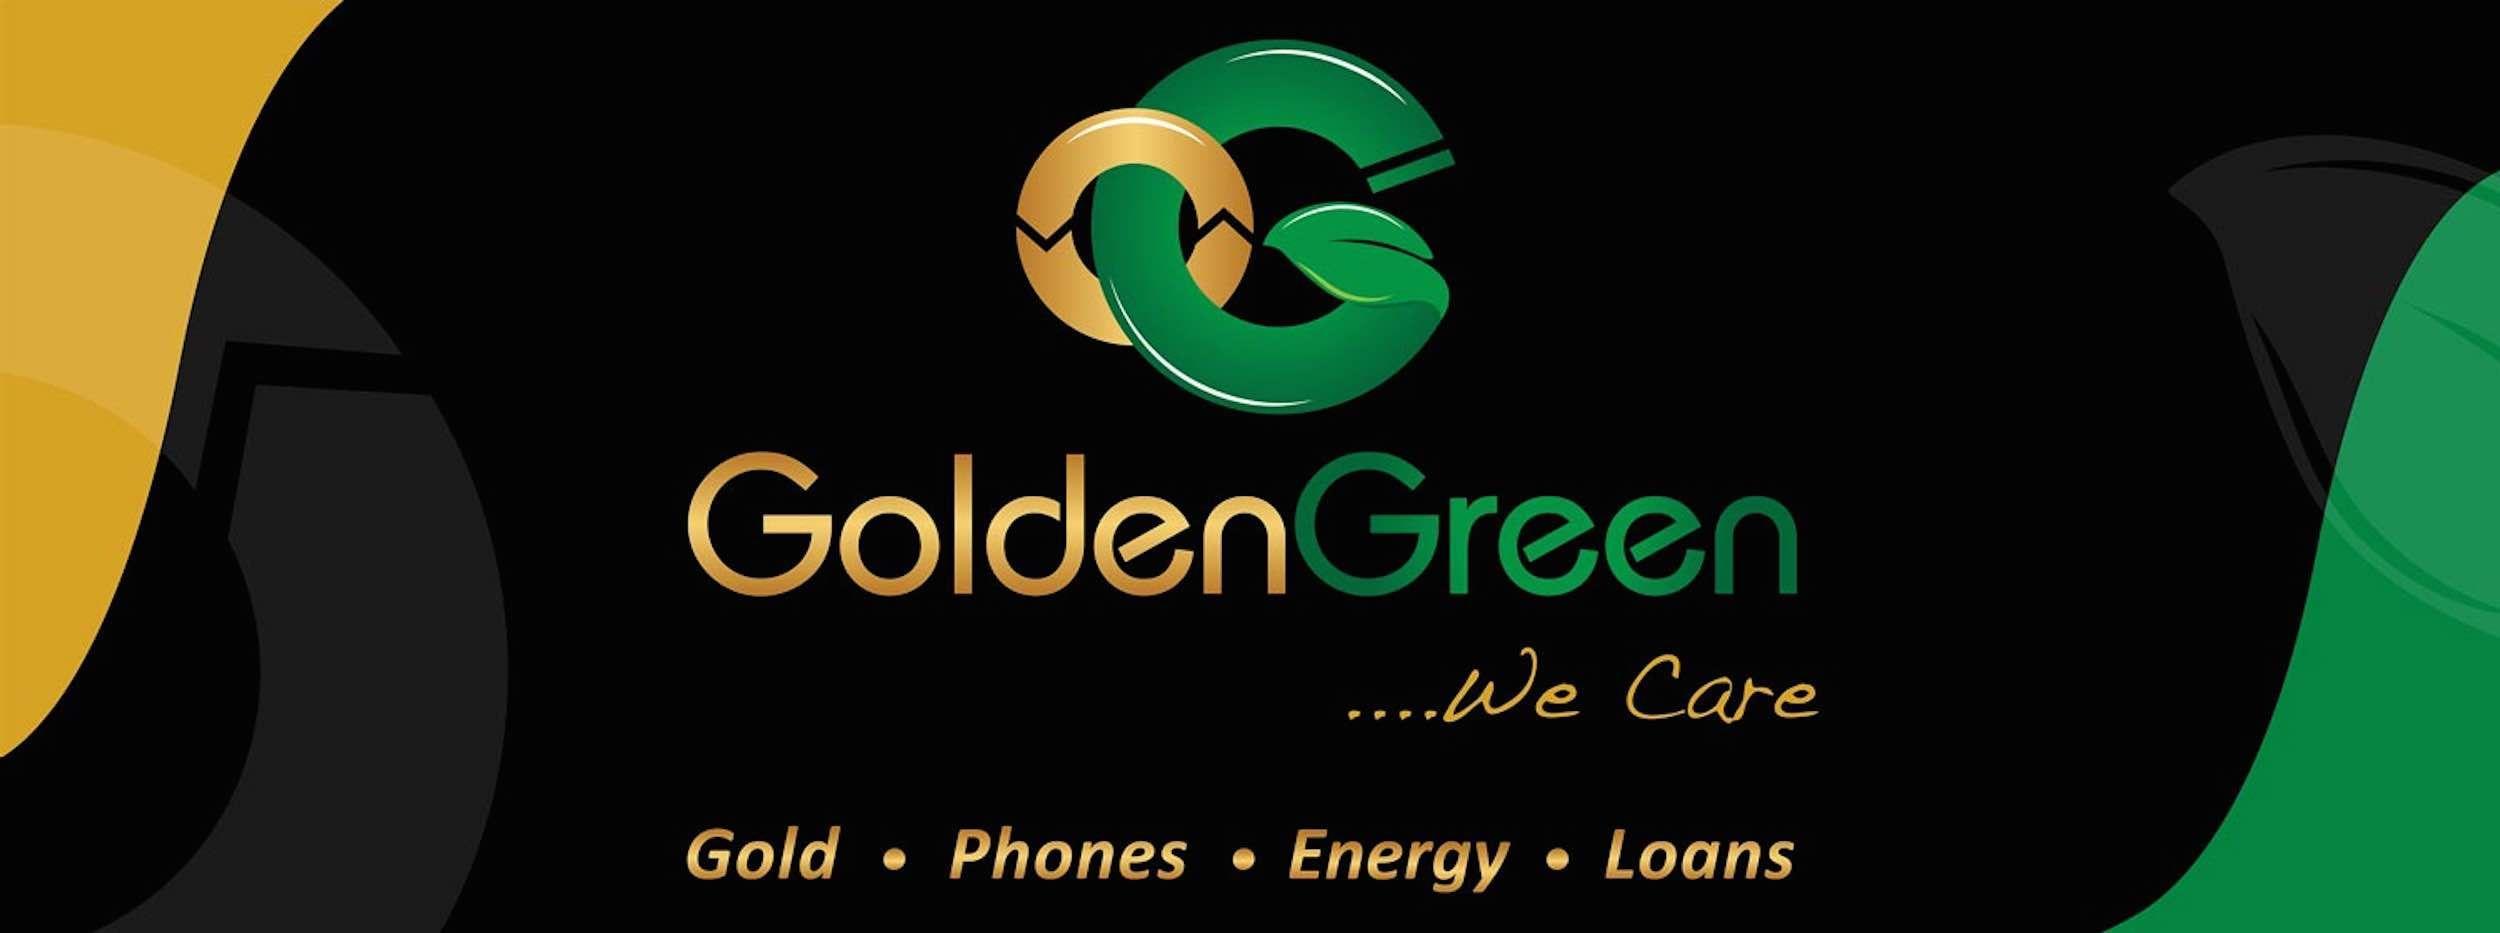 Green and Gold Logo - GoldenGreen